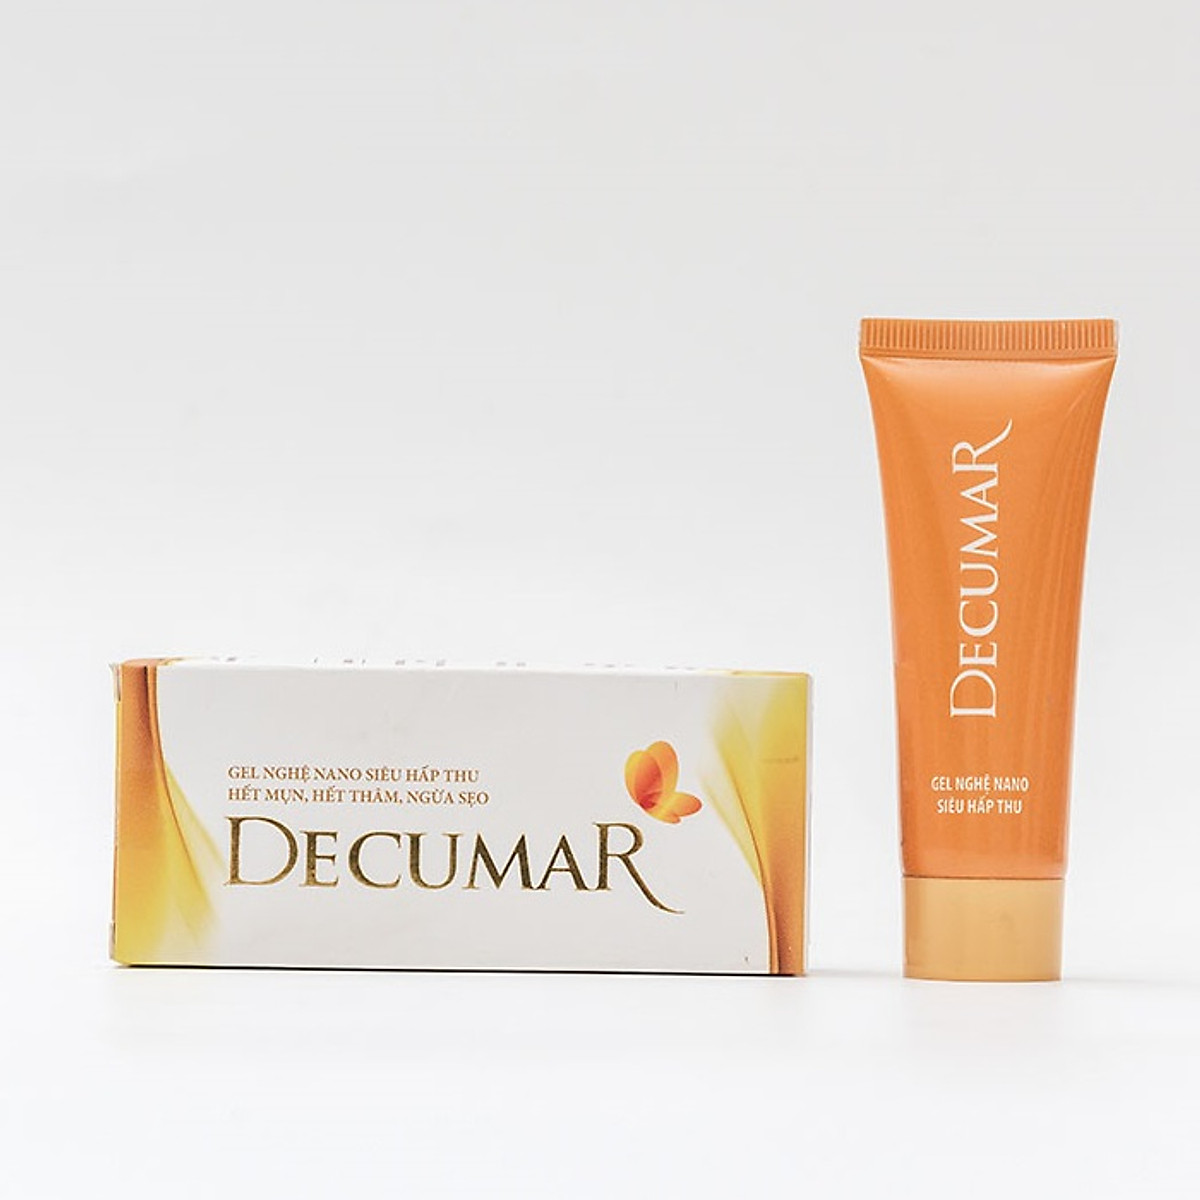 kem trị mụn decumar có tốt không, kem trị mụn decumar giá bao nhiêu, kem trị mụn decumar review, cách sử dụng kem trị mụn decumar, kem trị mụn decumar giá, cách dùng kem trị mụn decumar, kem trị mụn decumar bán ở đâu, kem trị mụn decumar new, kem trị mụn decumar có hiệu quả không, kem trị mụn decumar mua ở đâu, kem trị mụn decumar bao nhiêu tiền, tác dụng của kem trị mụn decumar, đánh giá kem trị mụn decumar, quảng cáo kem trị mụn decumar, hướng dẫn sử dụng kem trị mụn decumar